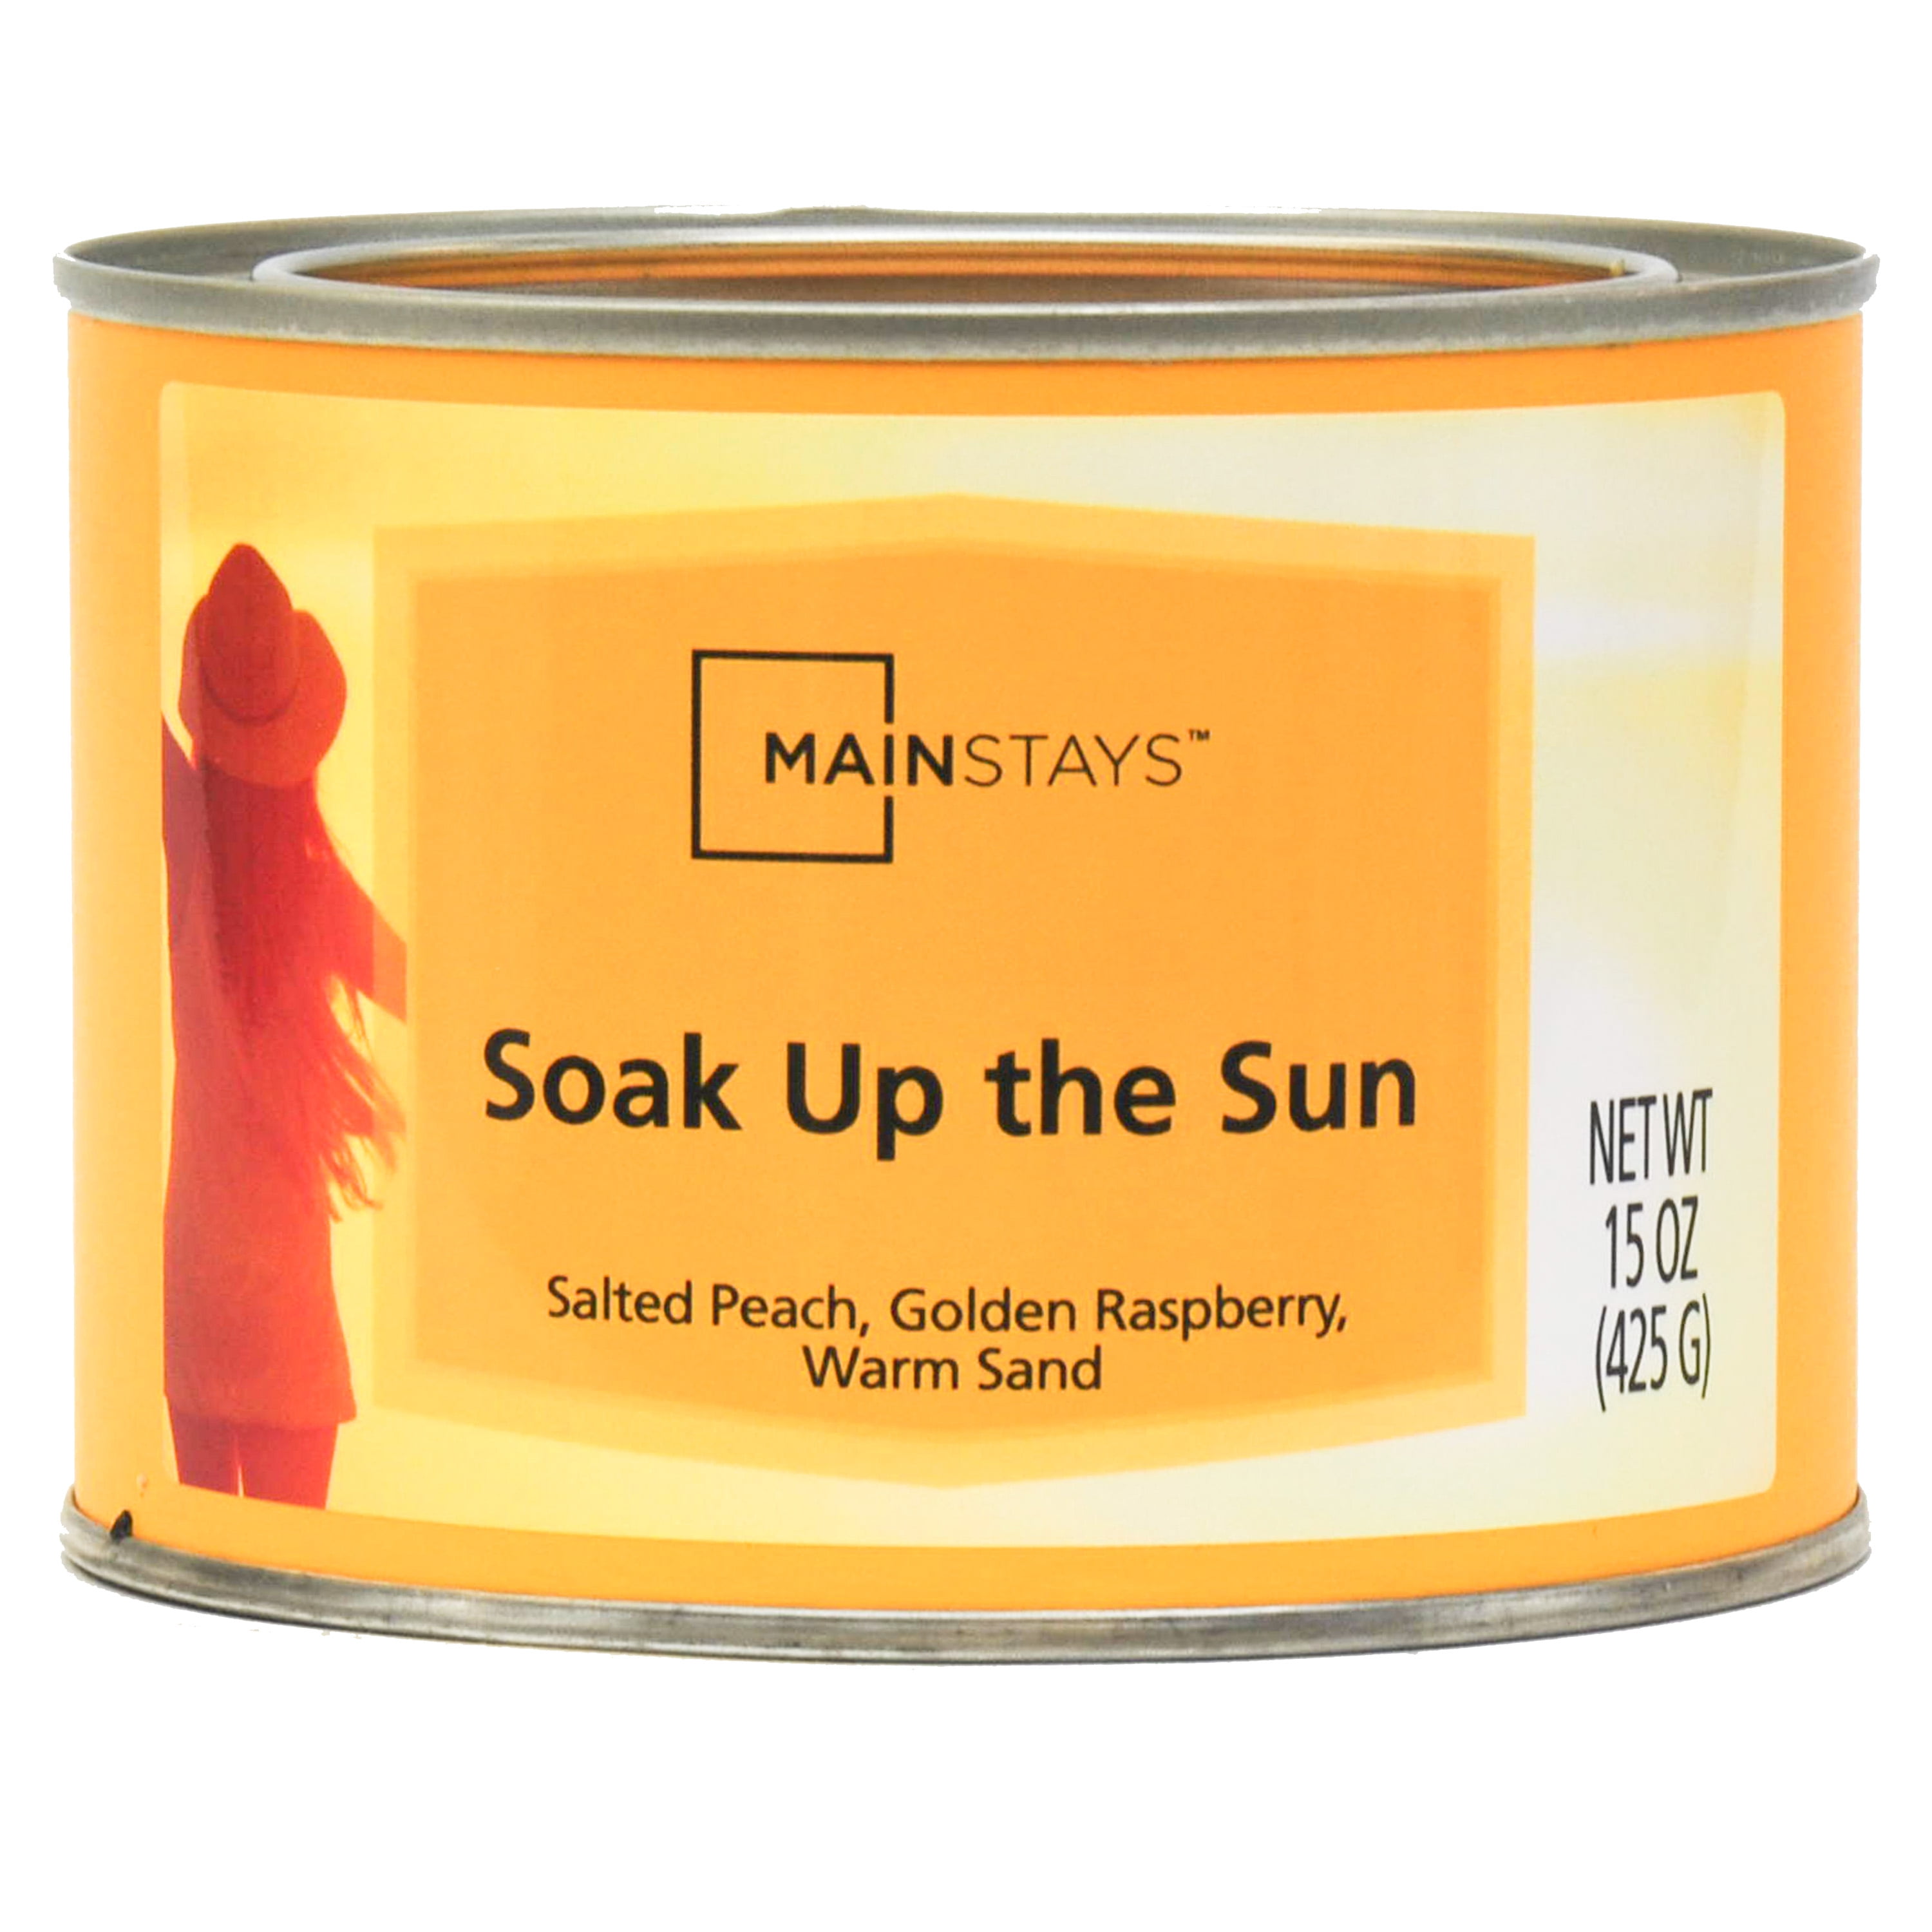 Mainstays Soak Up The Sun Wax Melt, 1.25 oz, 6 Pack